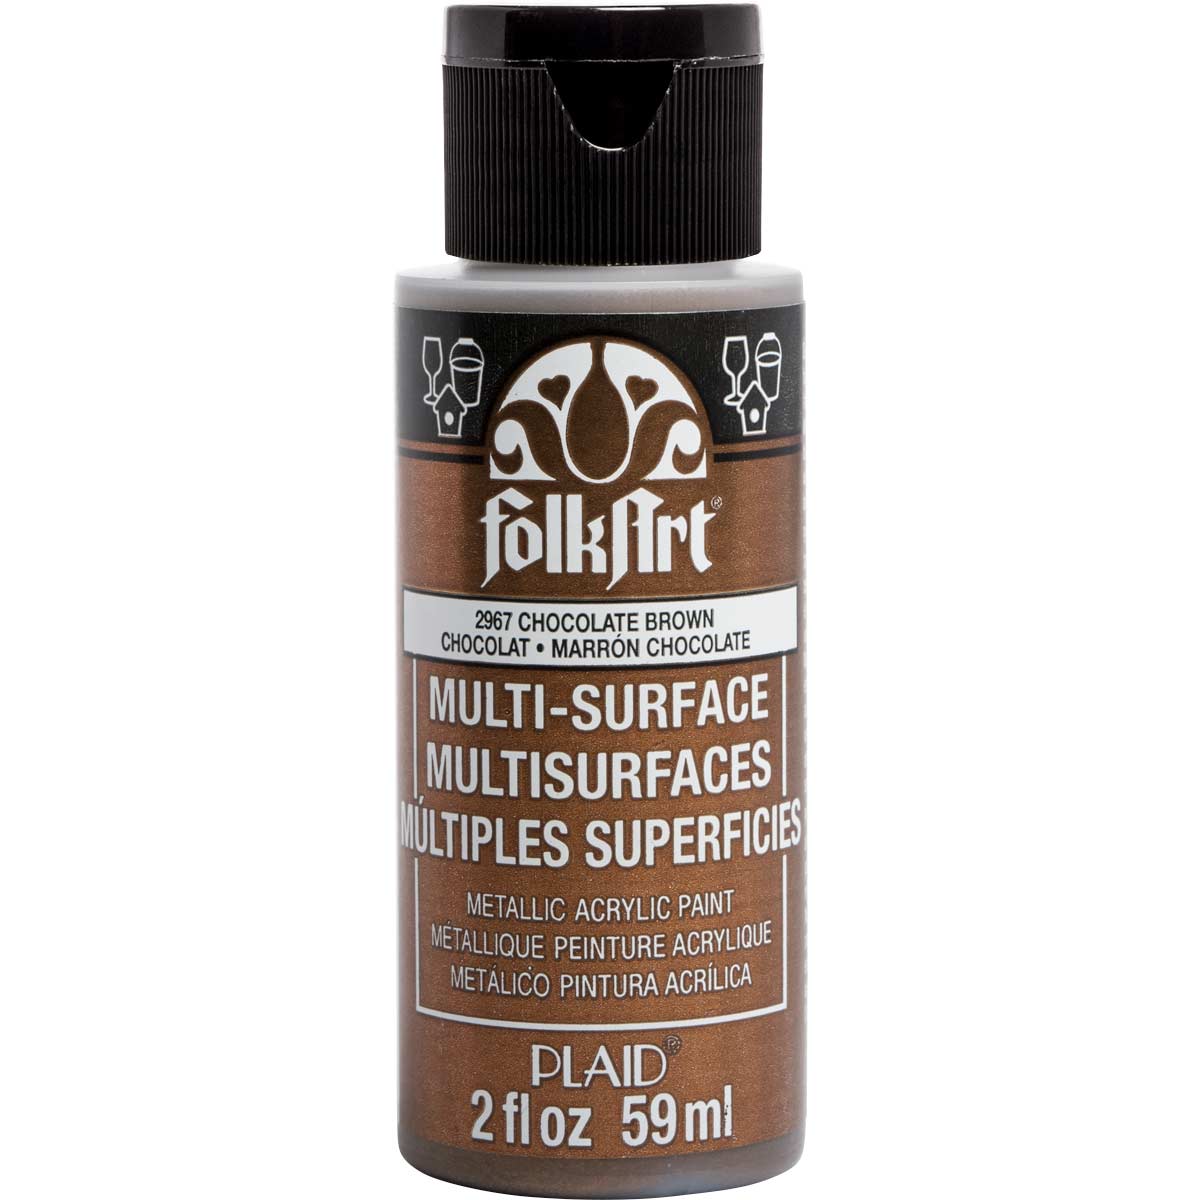 FolkArt ® Multi-Surface Metallic Acrylic Paints - Chocolate Brown, 2 oz. - 2967